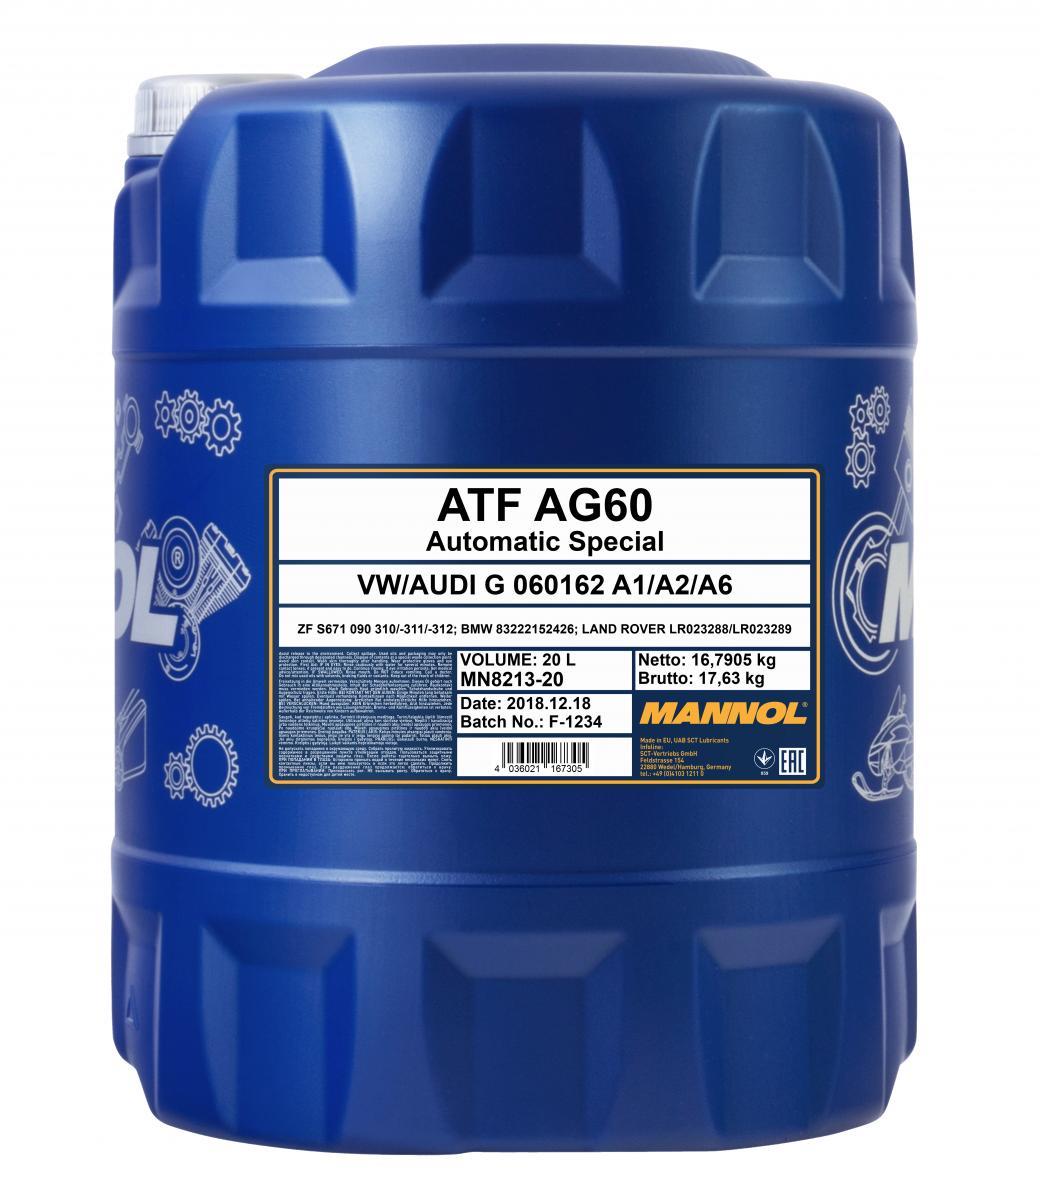 Mannol - 8213 ATF AG60 Automatic Transmission Fluid